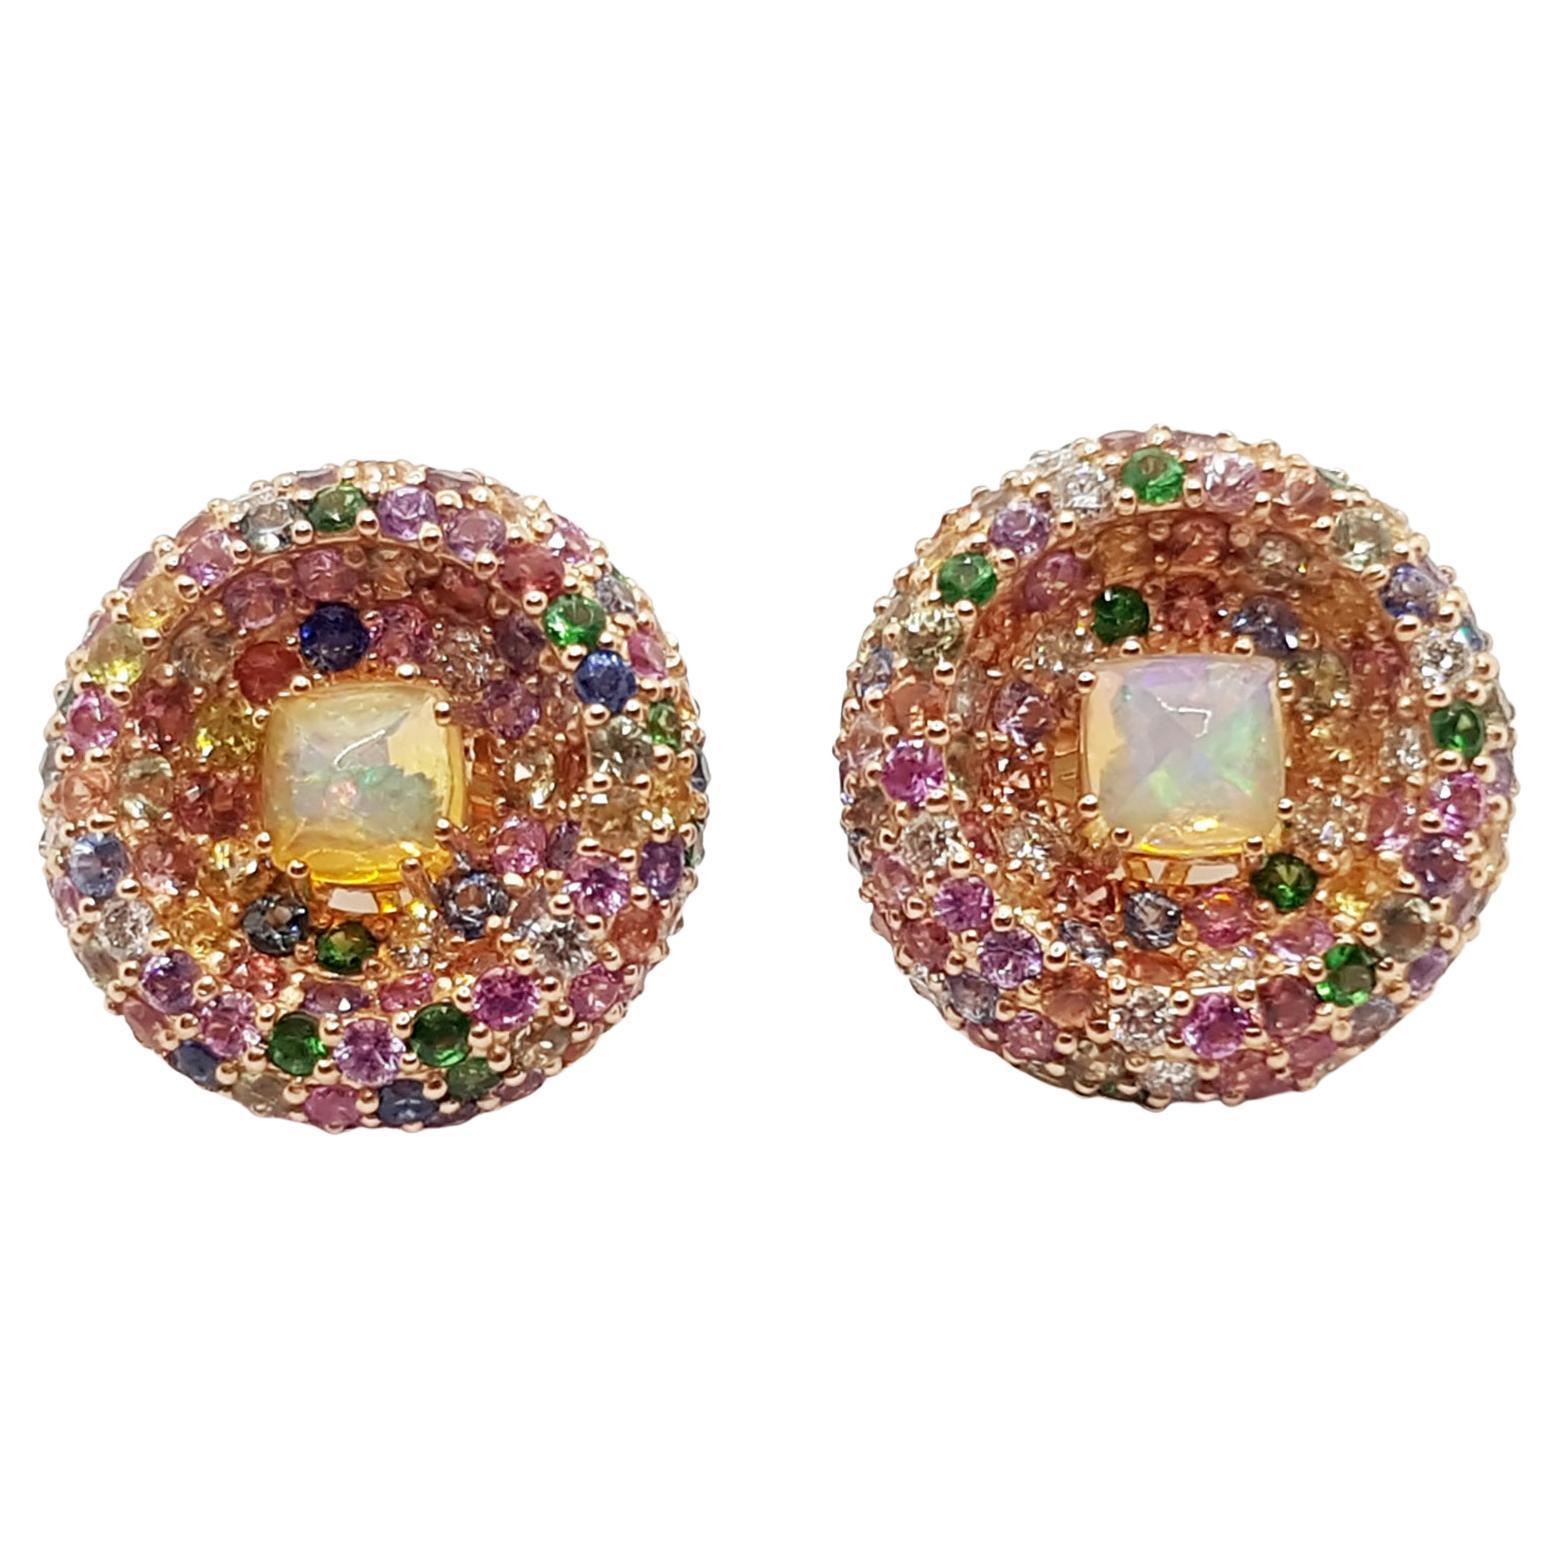 Buy Rainbow Moonstone Earrings, Pave Diamond Earring, Gemstone Earring  Jewelry, 925 Silver Gold Vermeil Earrings, Diamond Silver Gift Jewelry  Online in India - Etsy